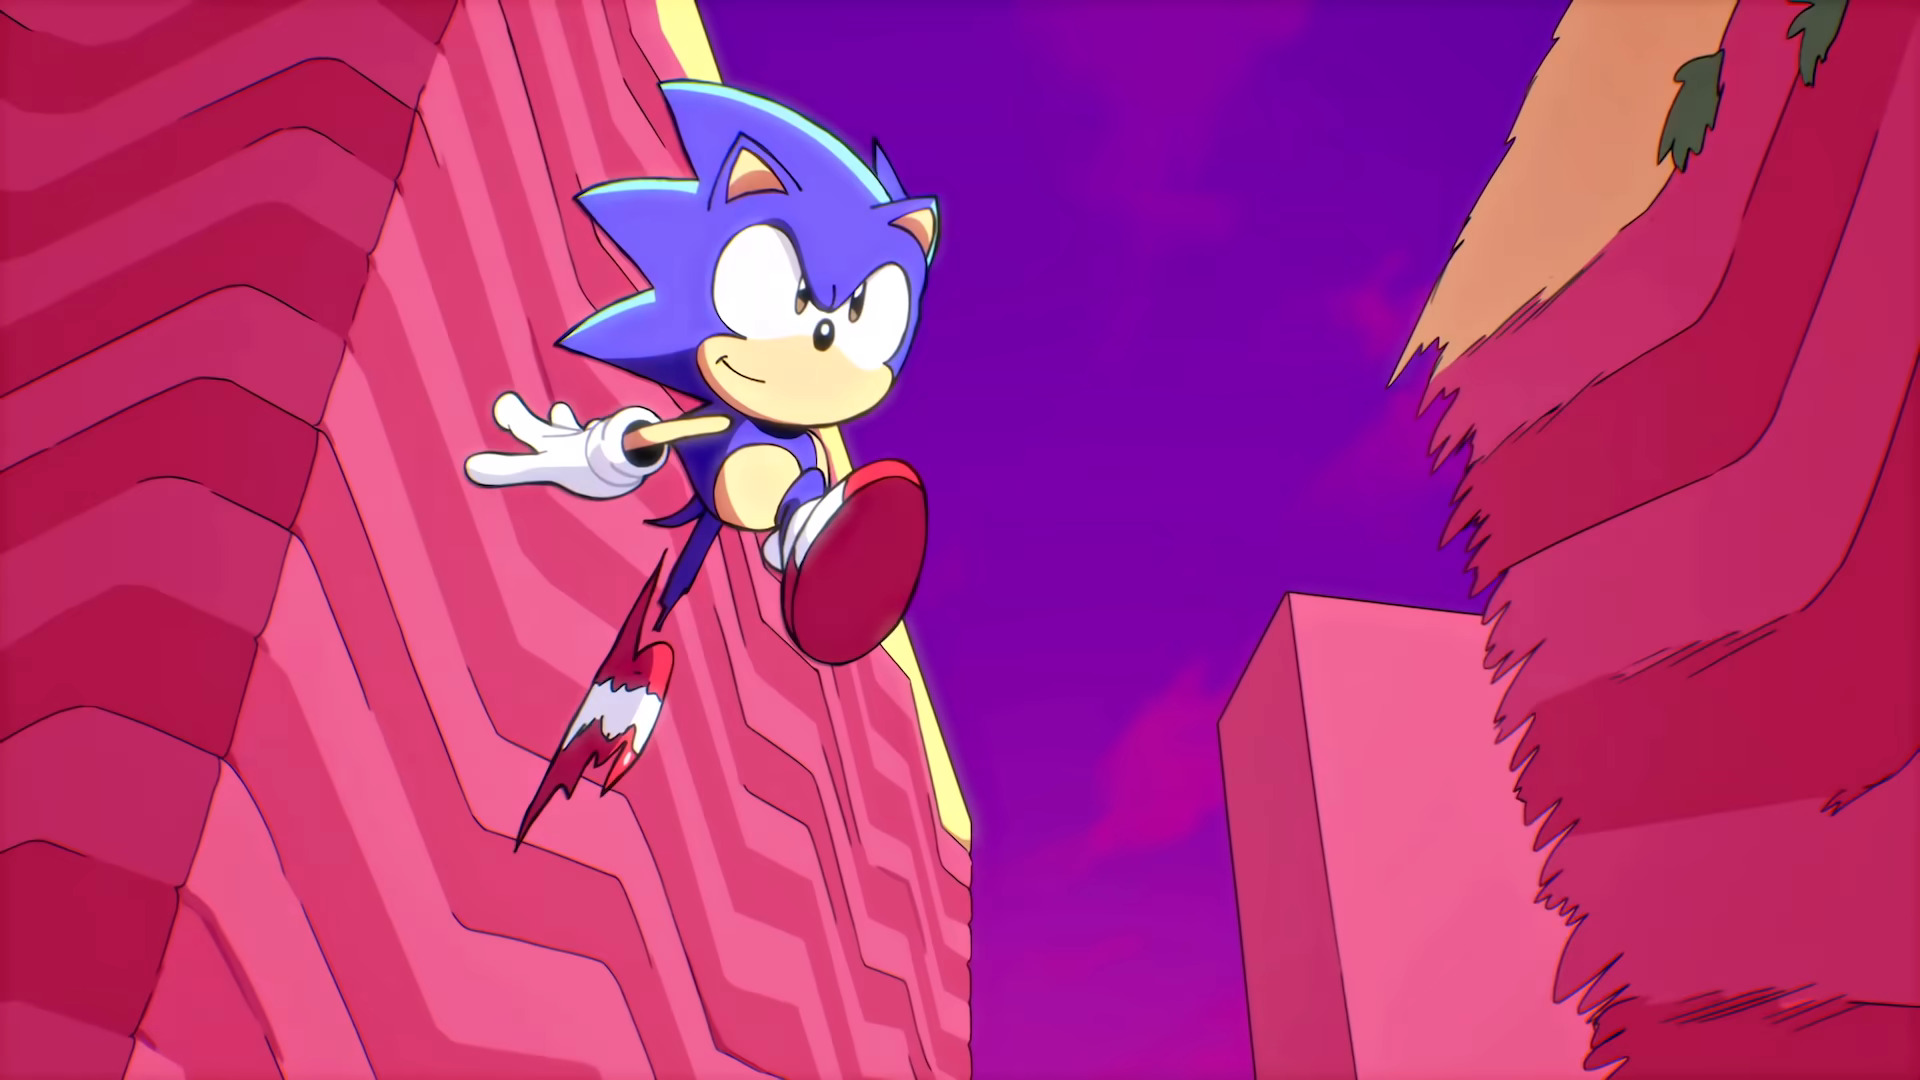 SEGA Confirms Knuckles Not Playable in Sonic Origins Sonic CD Port – SoaH  City